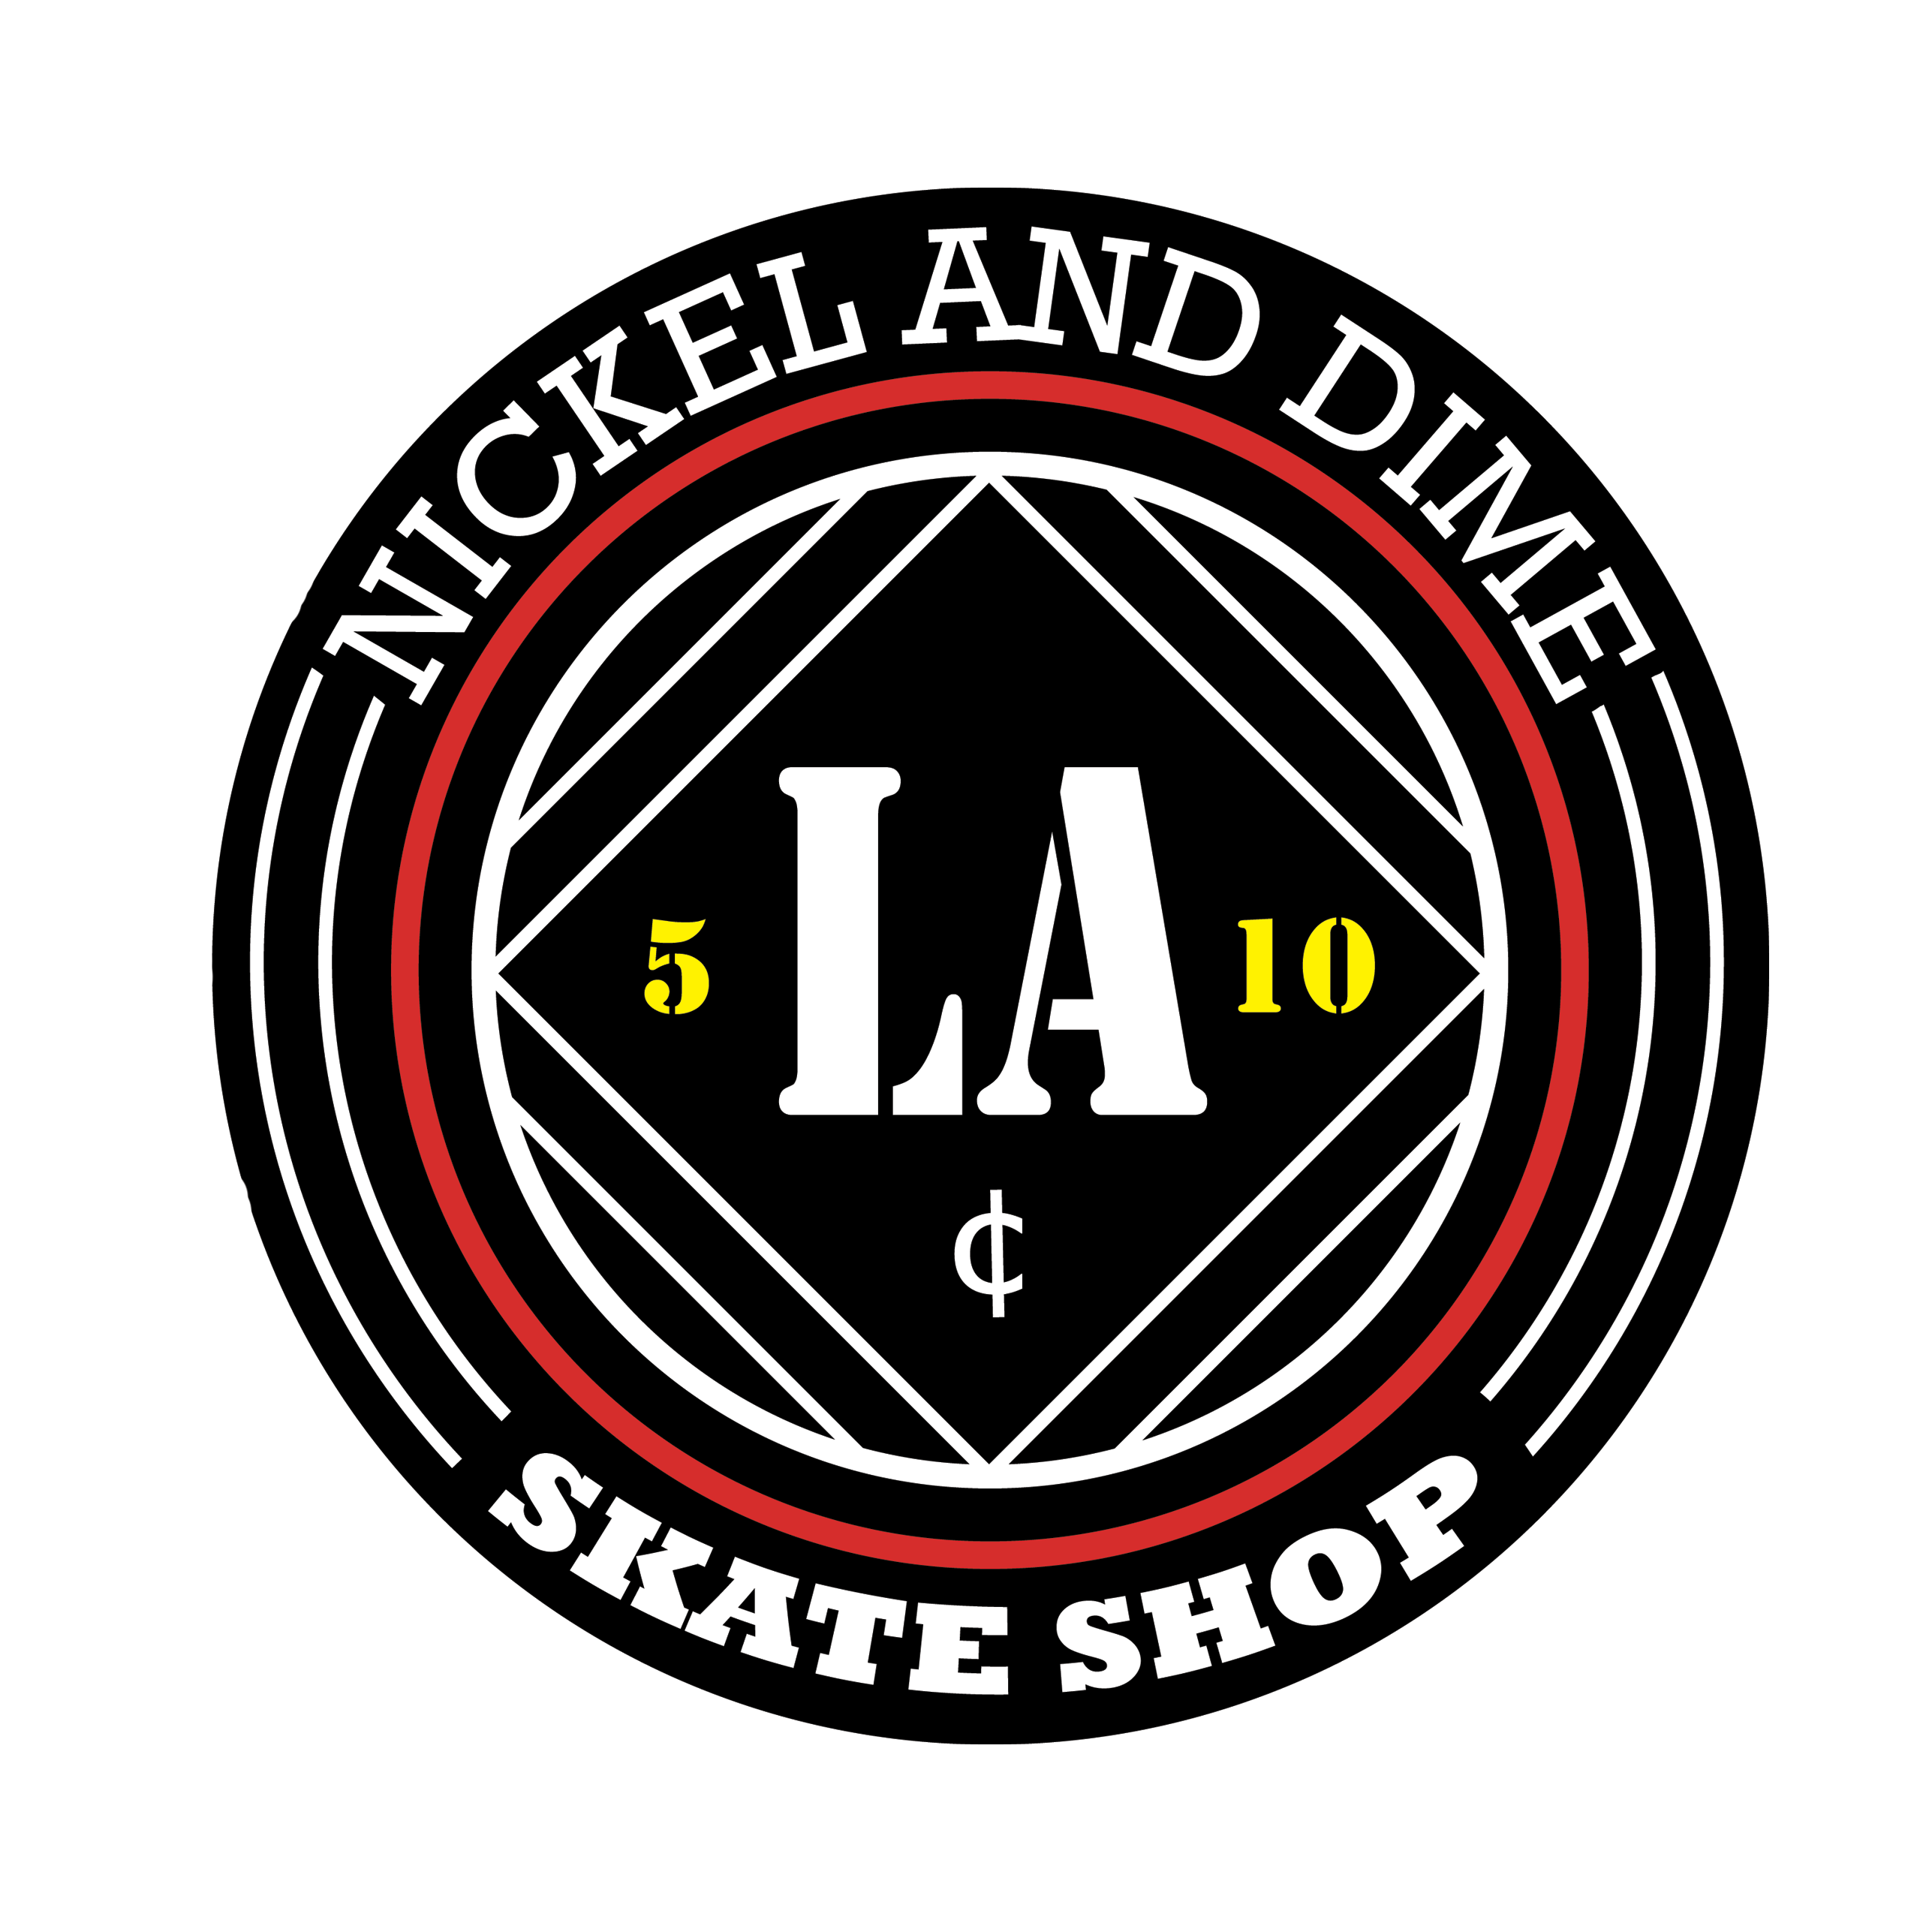 Nickel and dime skate shop 